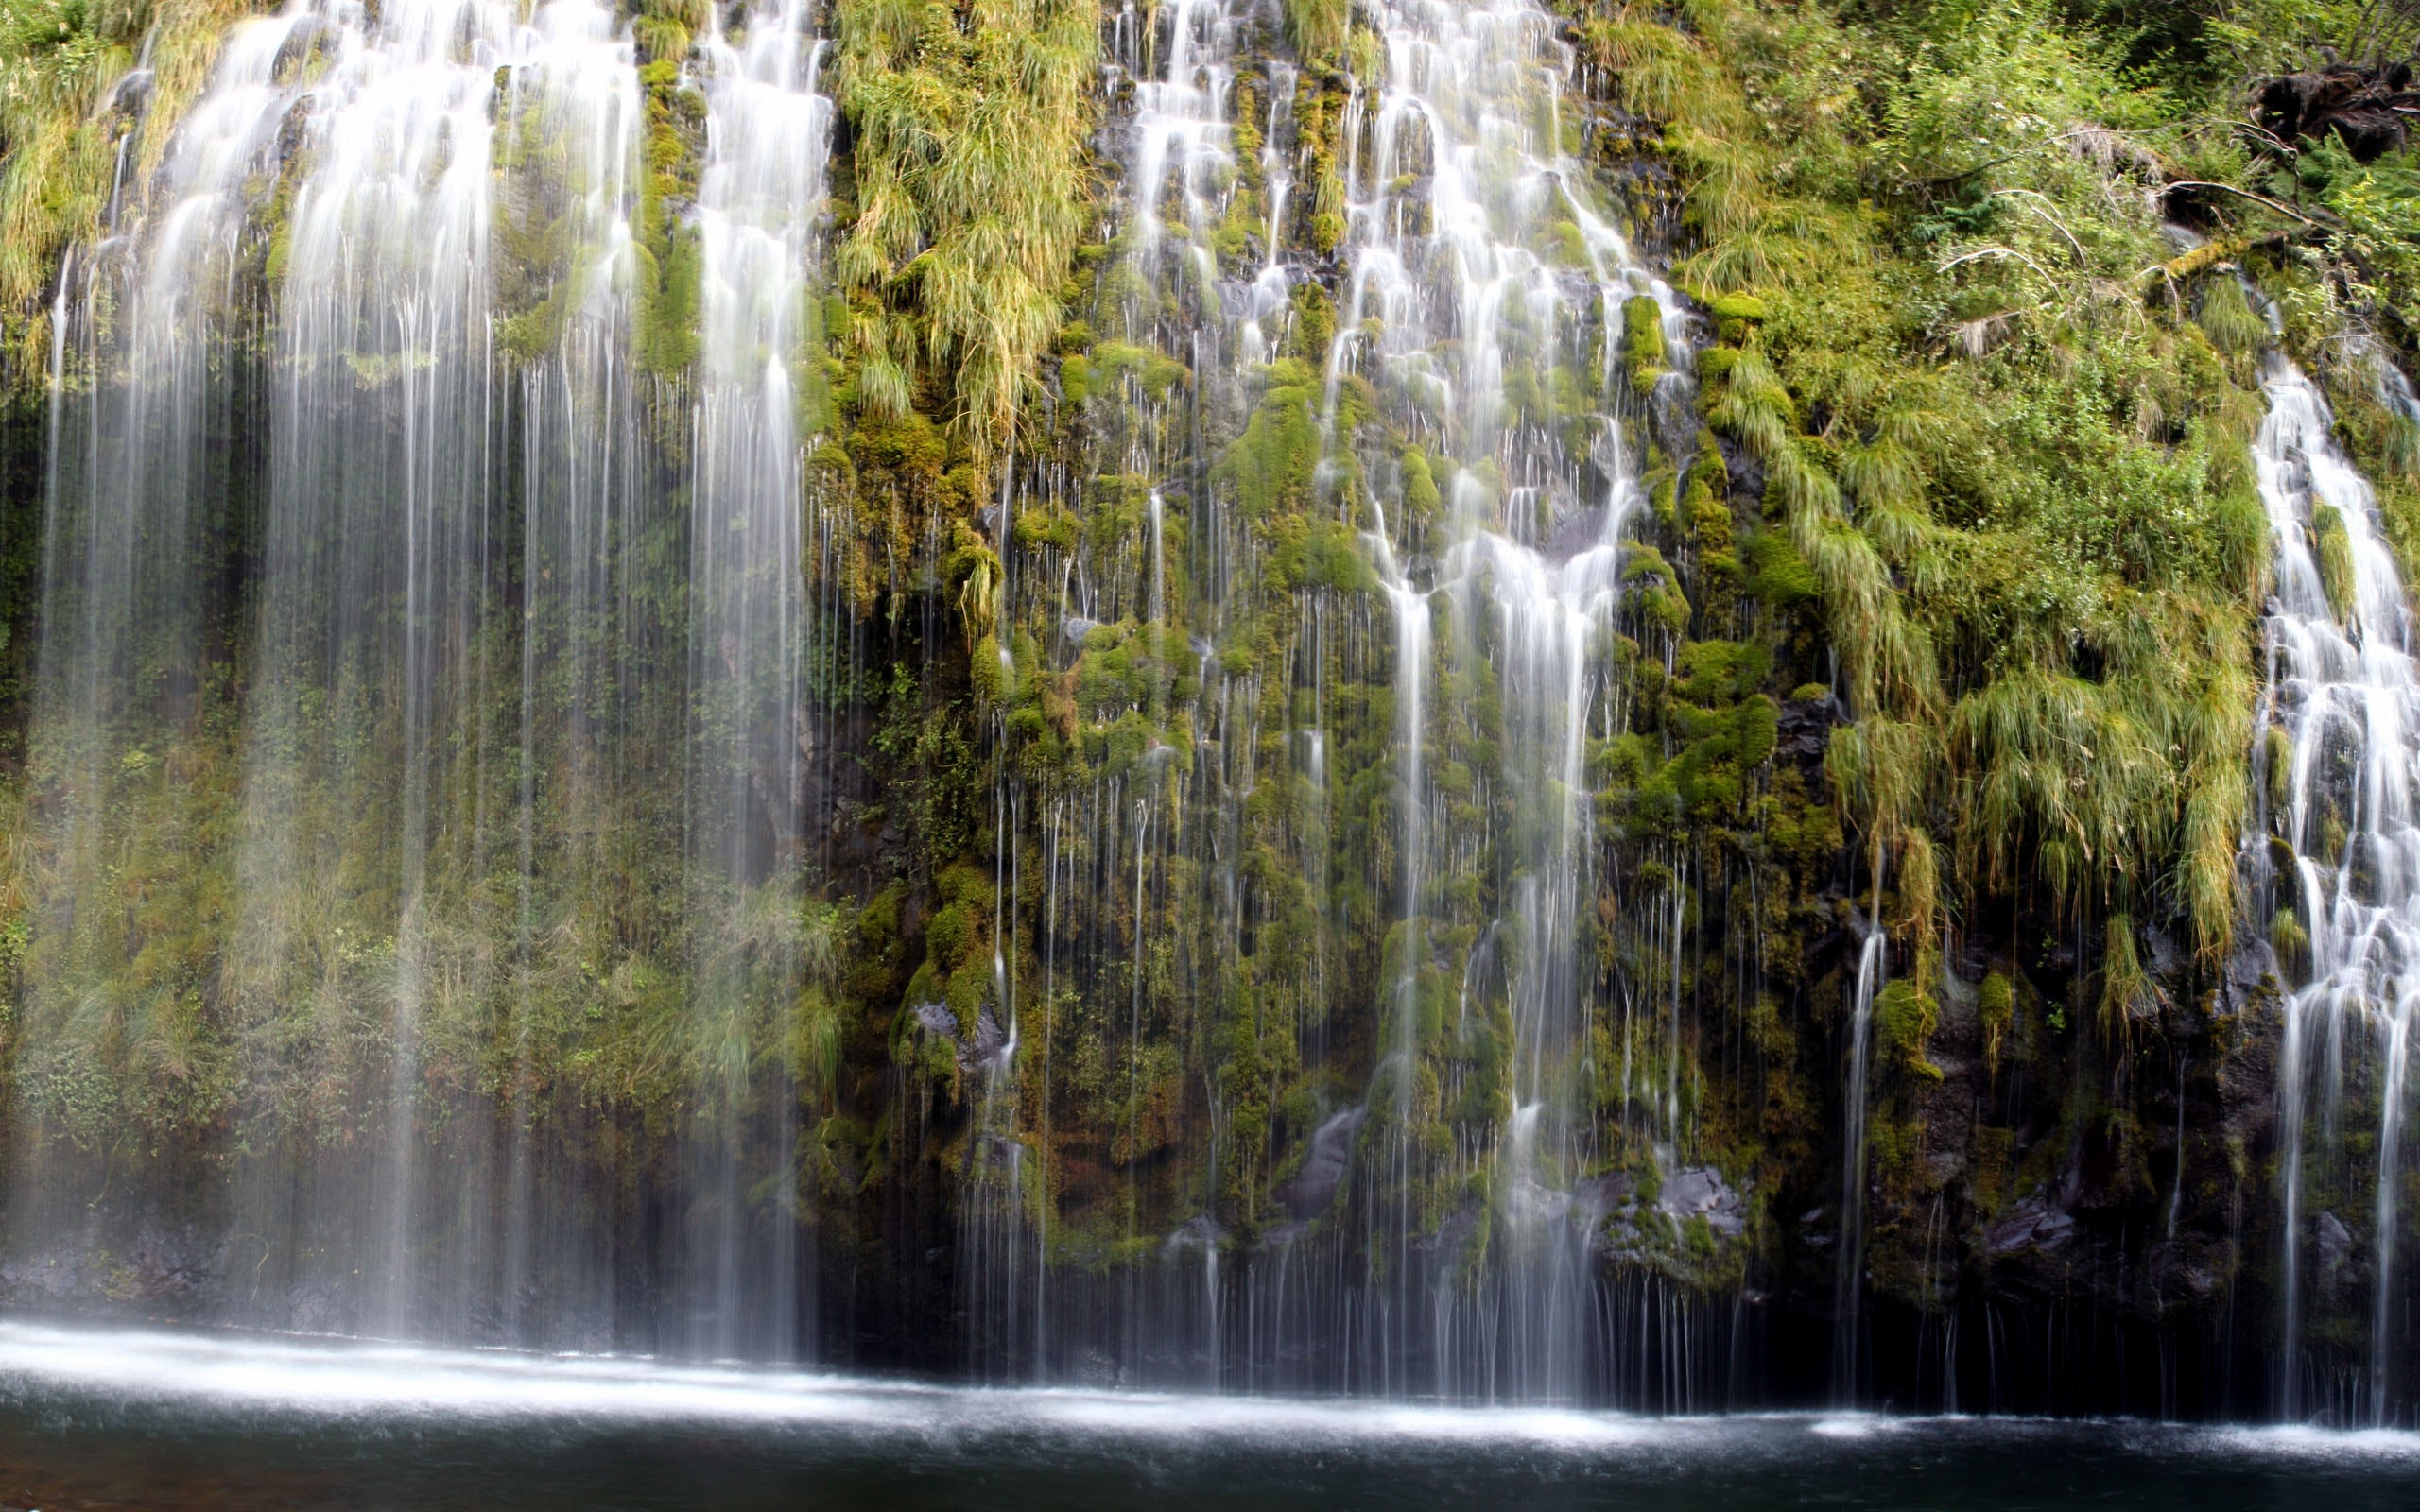 Обои на телефон живой водопад. Живая природа водопады. Красивые водопады. Живые водопады. Водопад картинки.